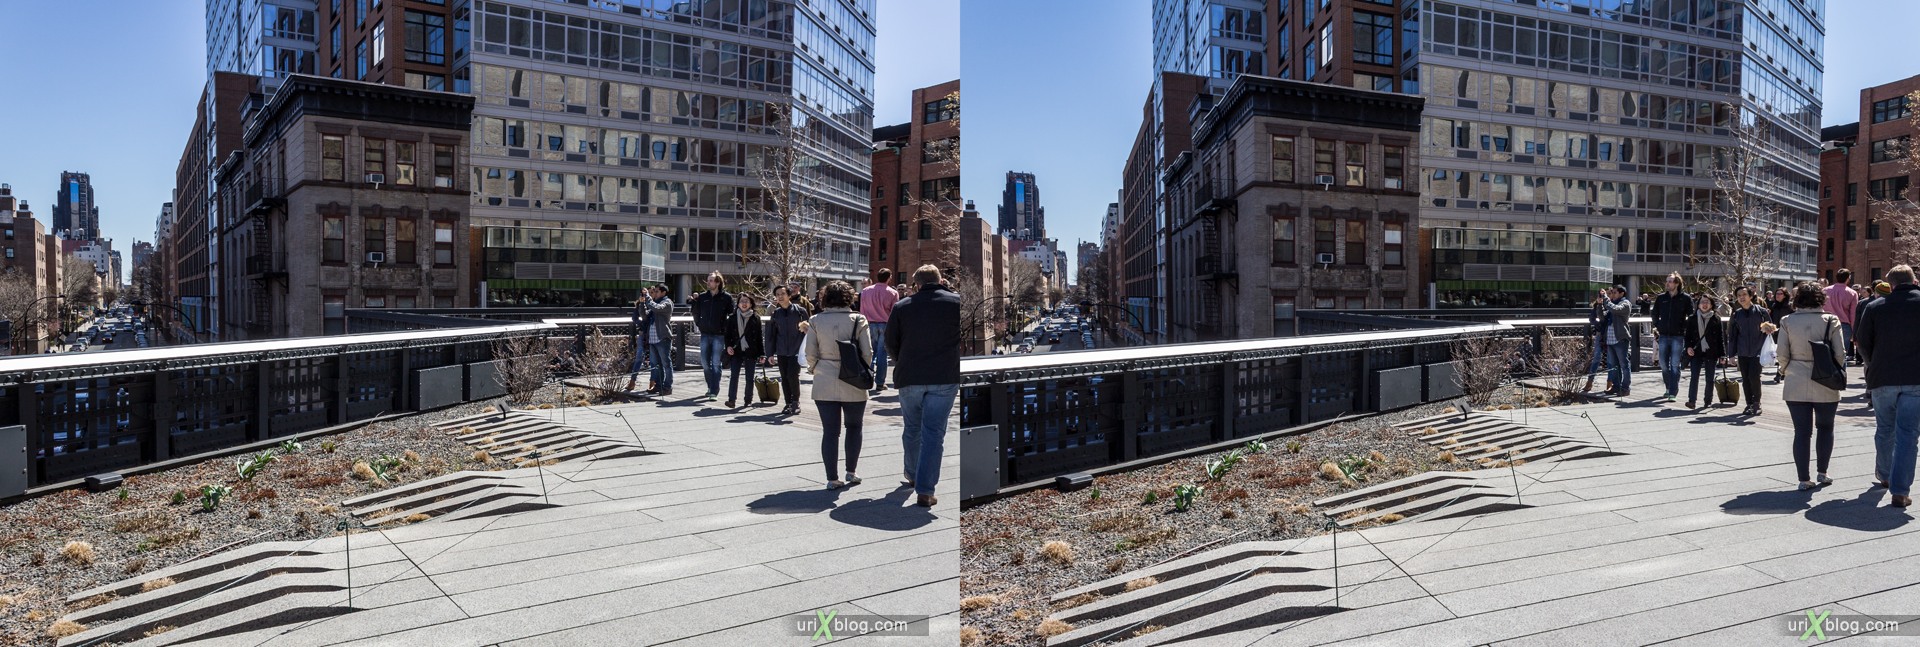 2013, High Line, park, railway, people, NYC, New York, Manhattan, USA, 3D, stereo pair, cross-eyed, crossview, cross view stereo pair, stereoscopic